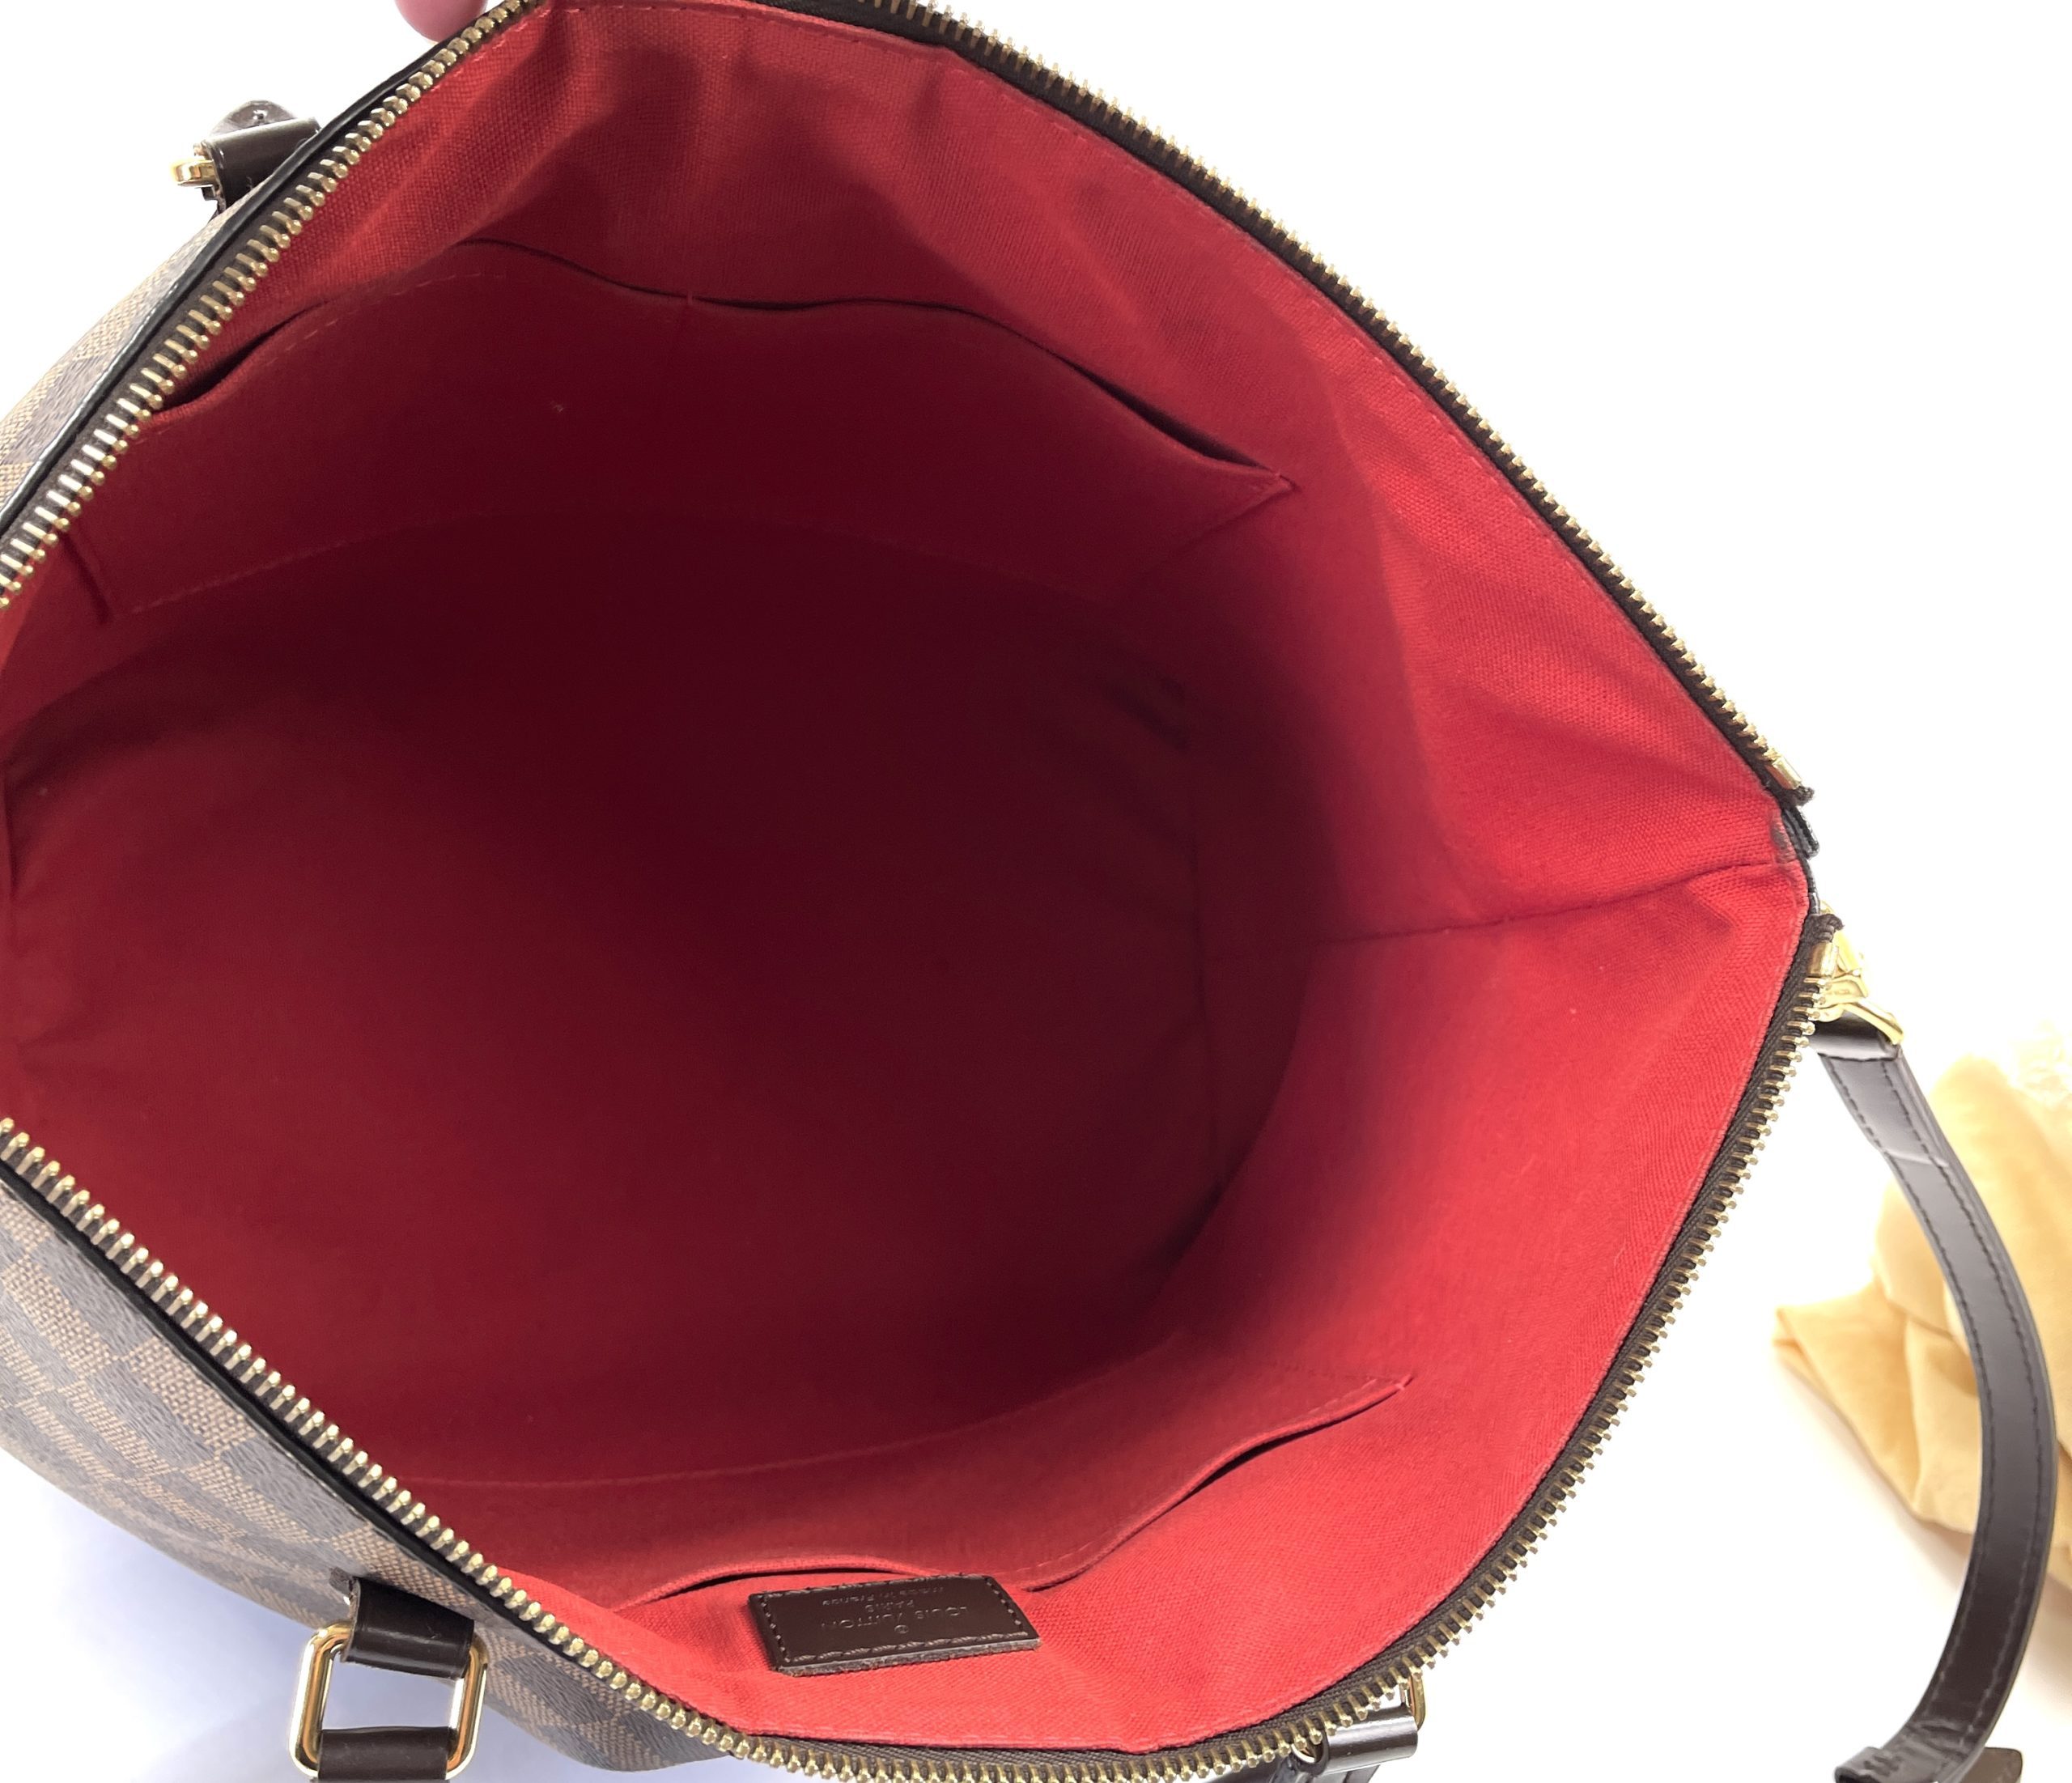 Louis Vuitton Siena GM Bag Review 